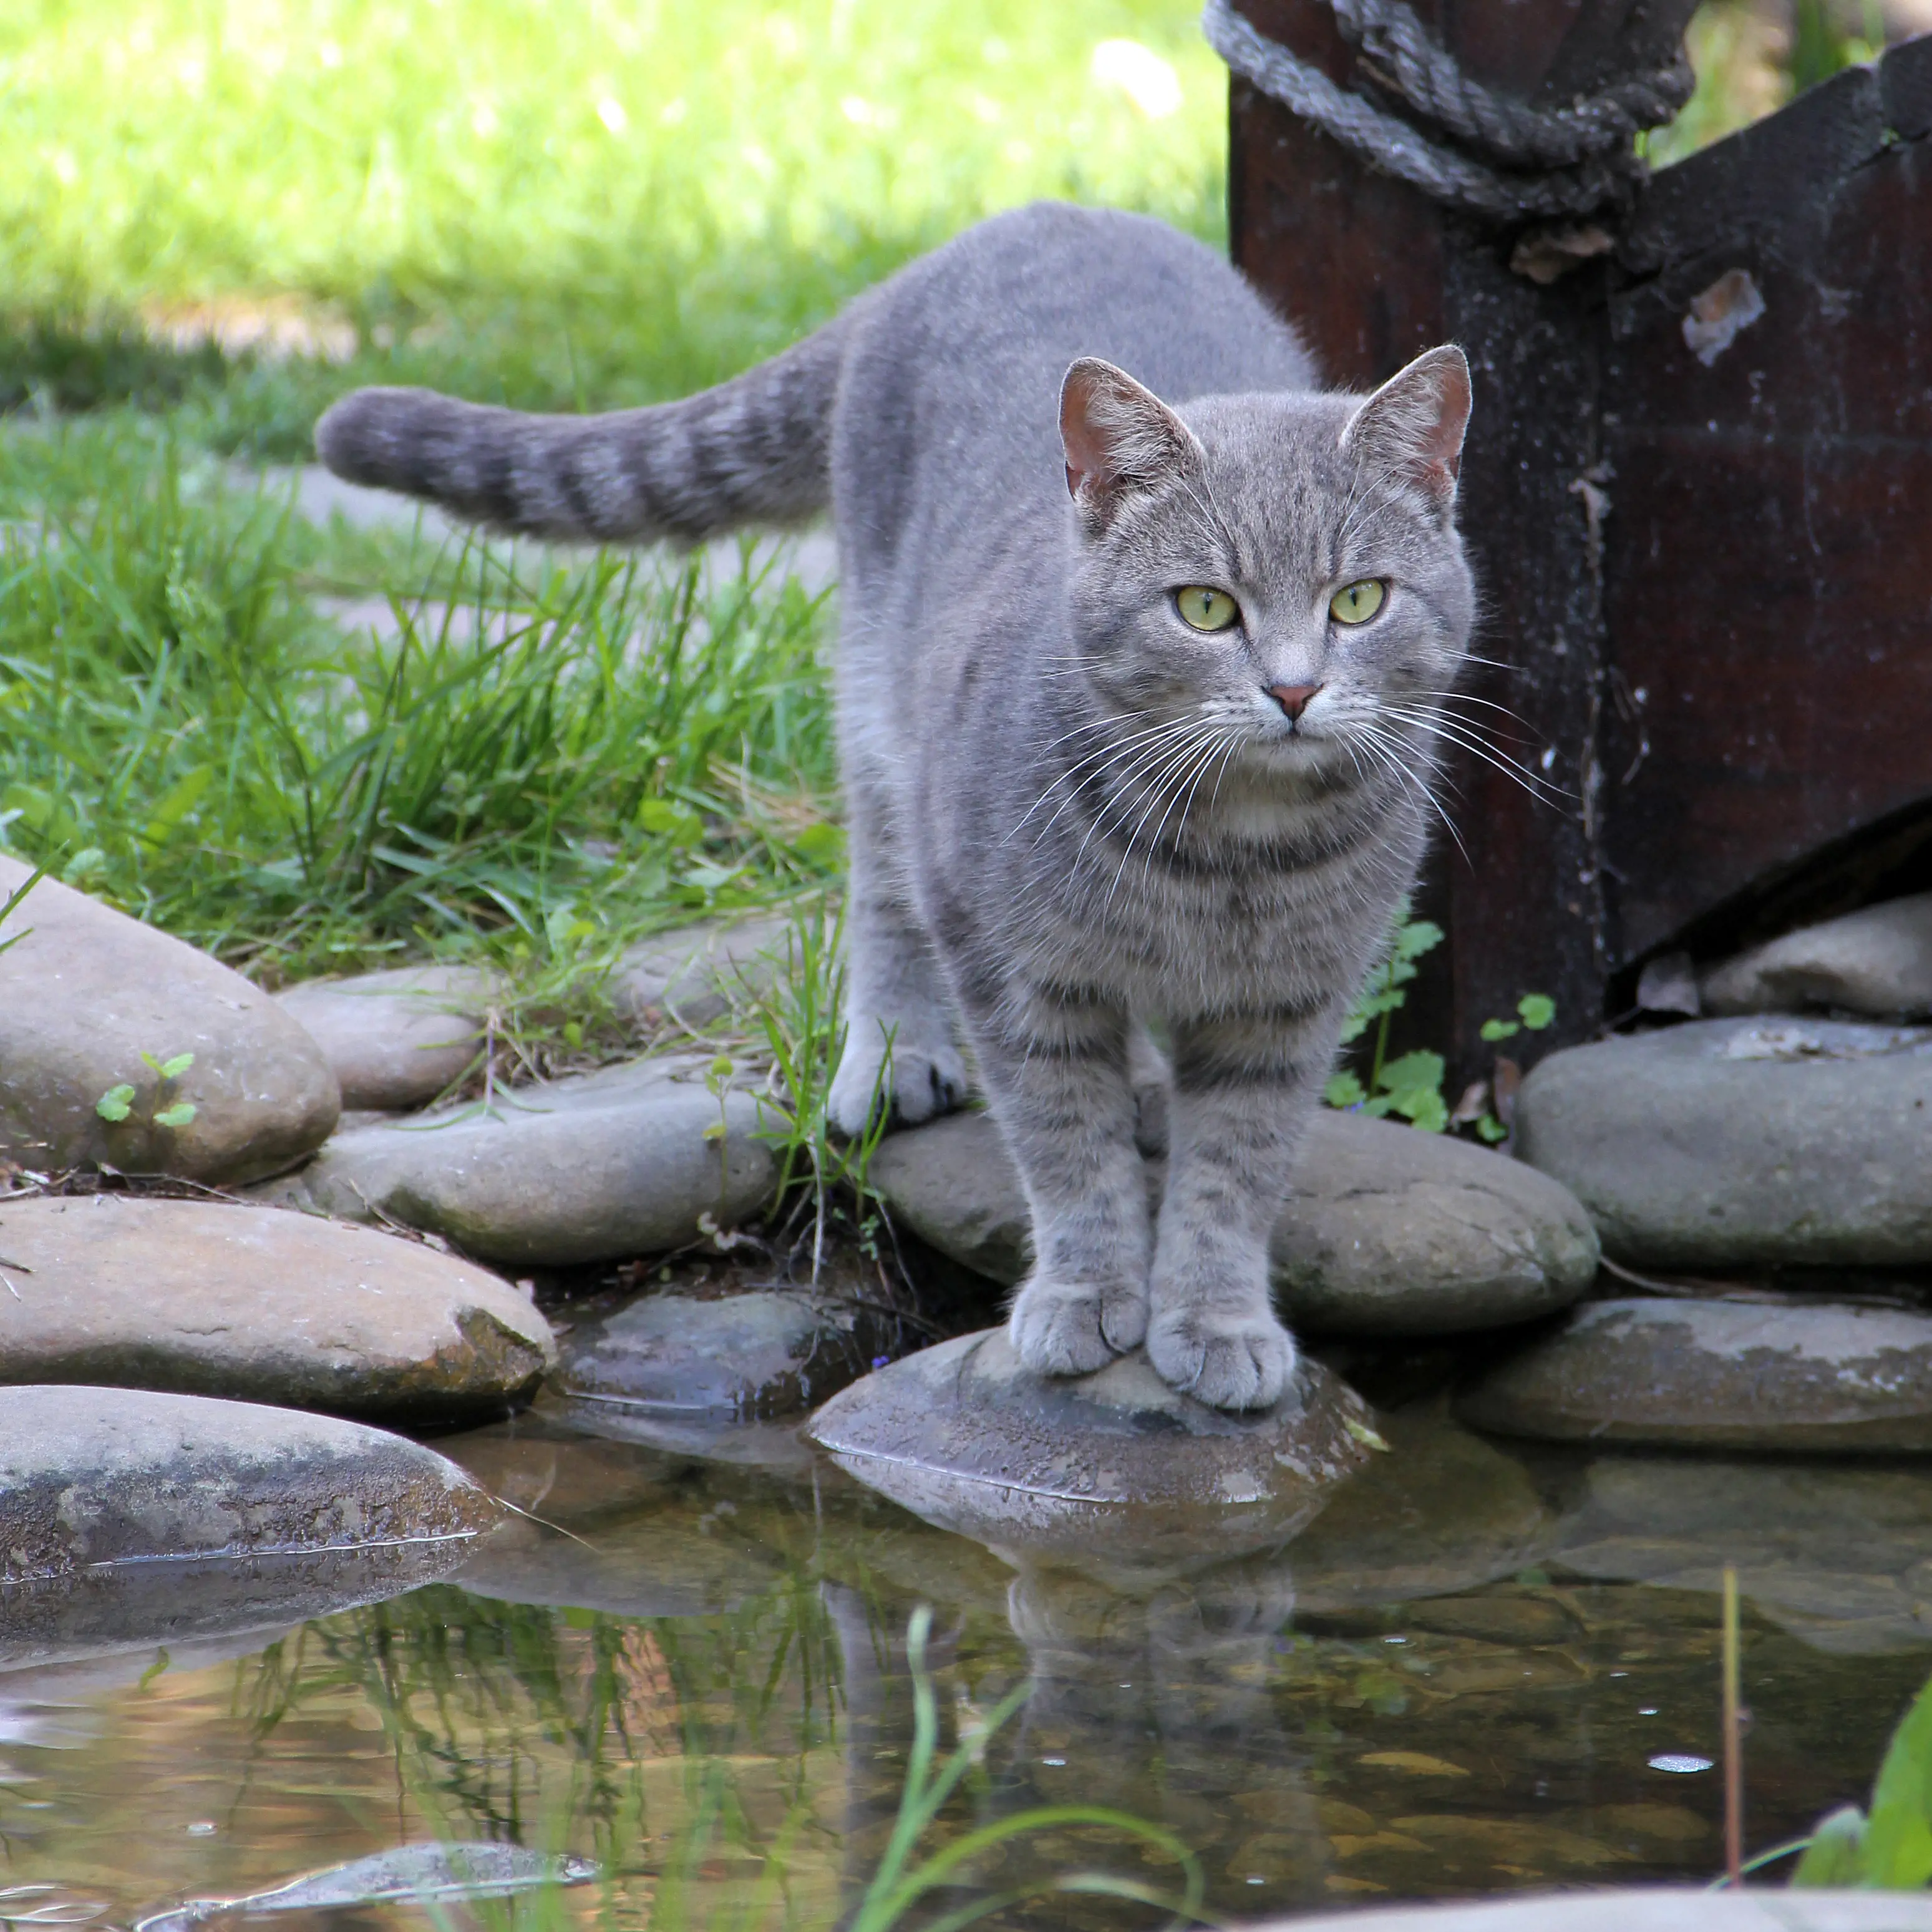 Study reveals where pet cats roam outdoors